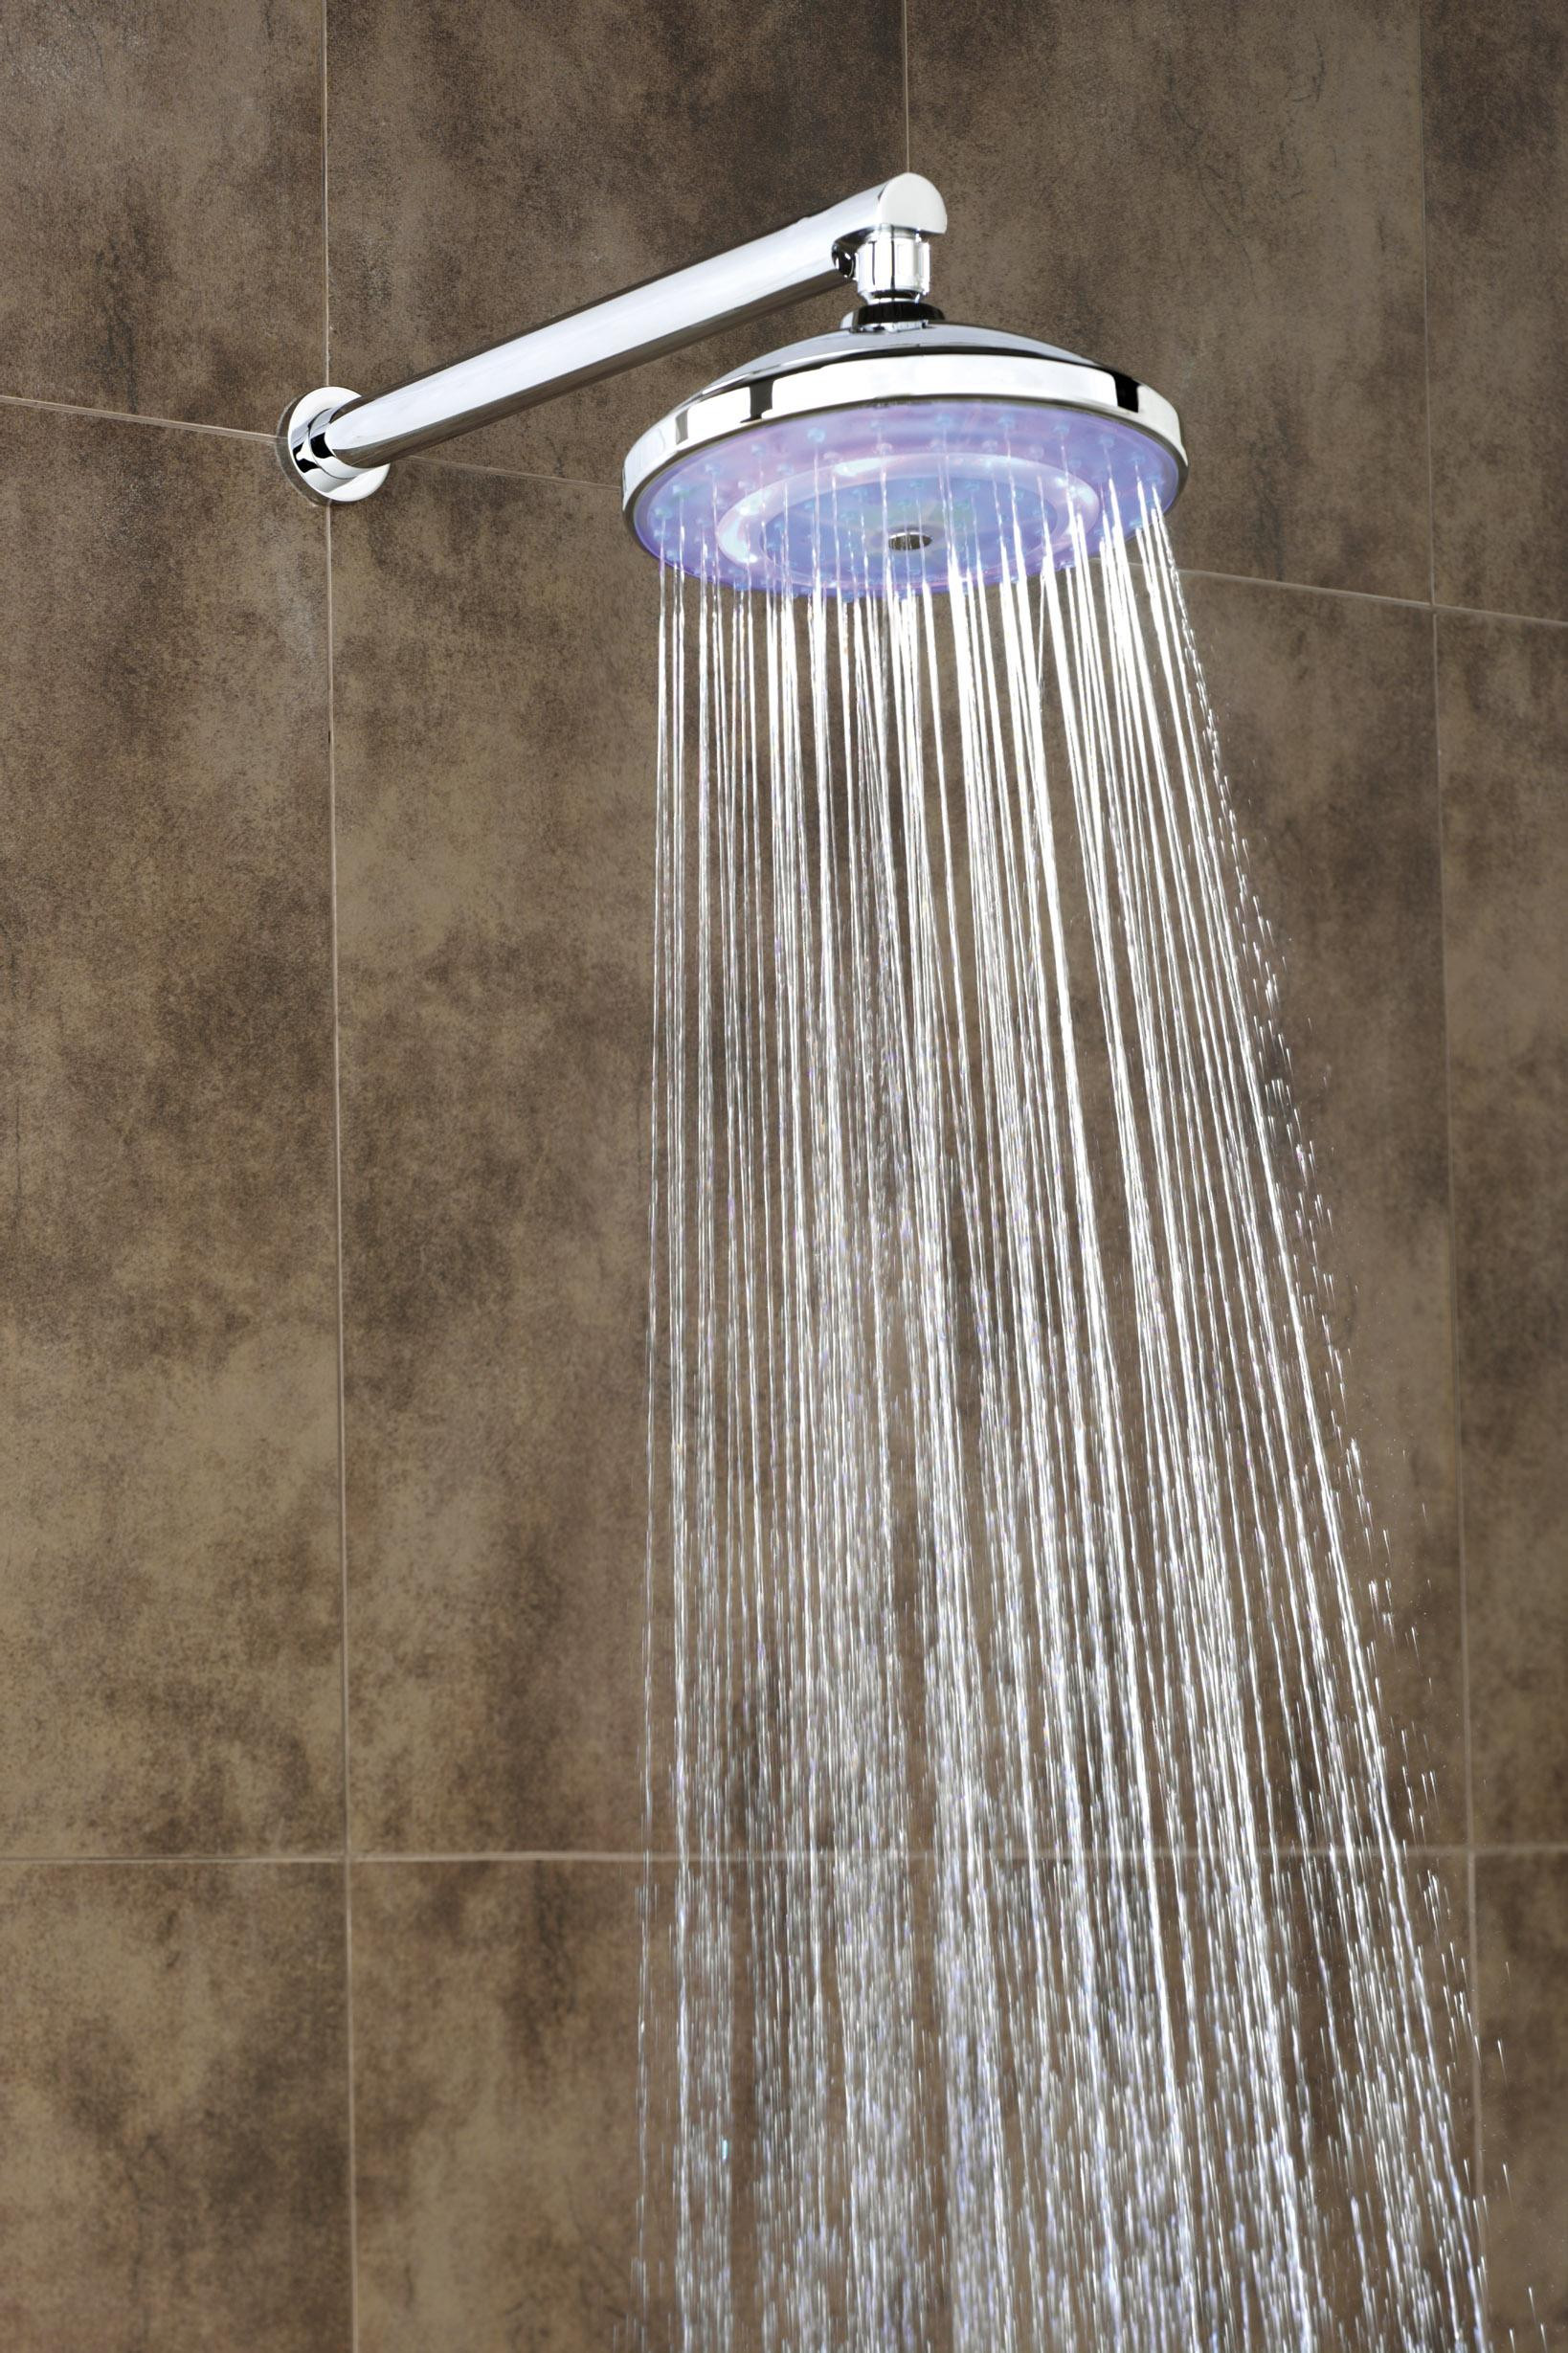 Bathroom Shower Head
 Shower Arm Choosing the Perfect e for Your Bathroom